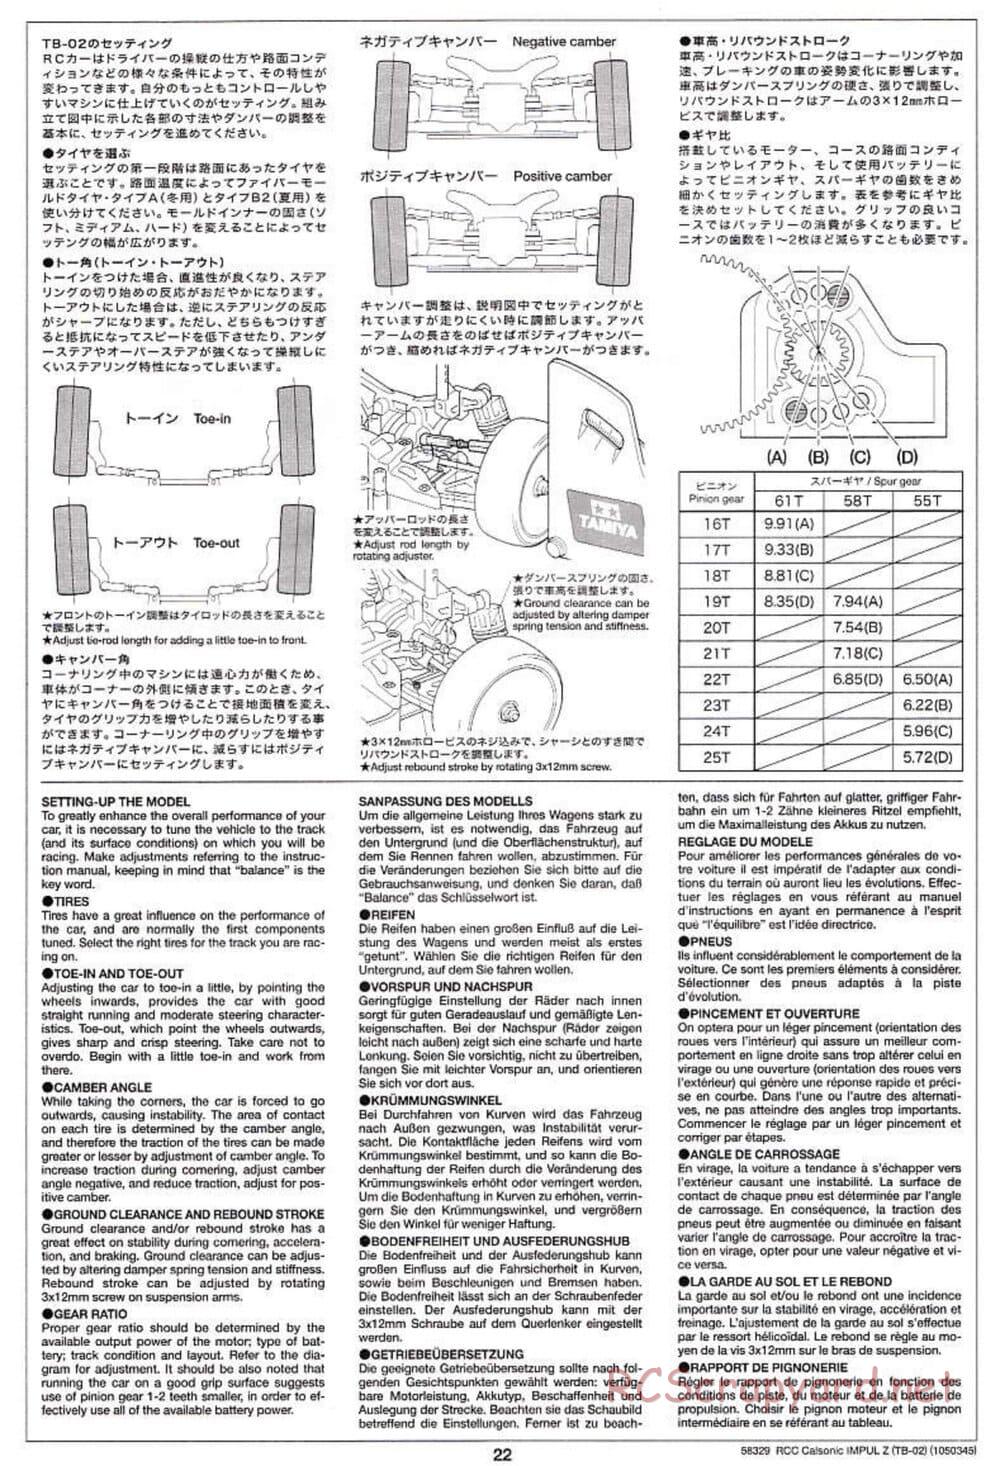 Tamiya - Calsonic Impul Z - TB-02 Chassis - Manual - Page 22